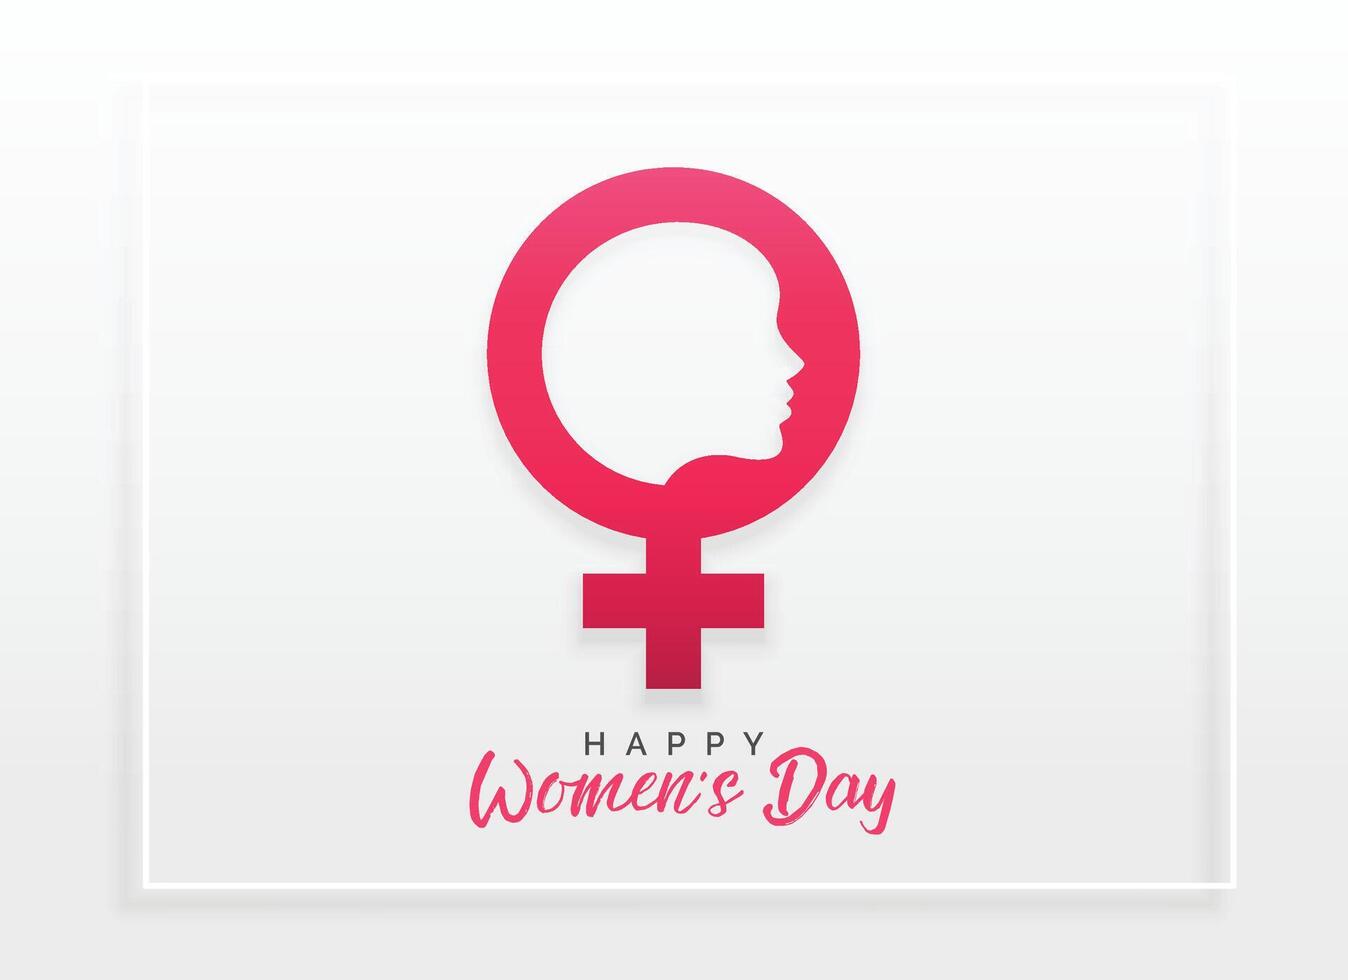 happy women's day celebration concept design background vector